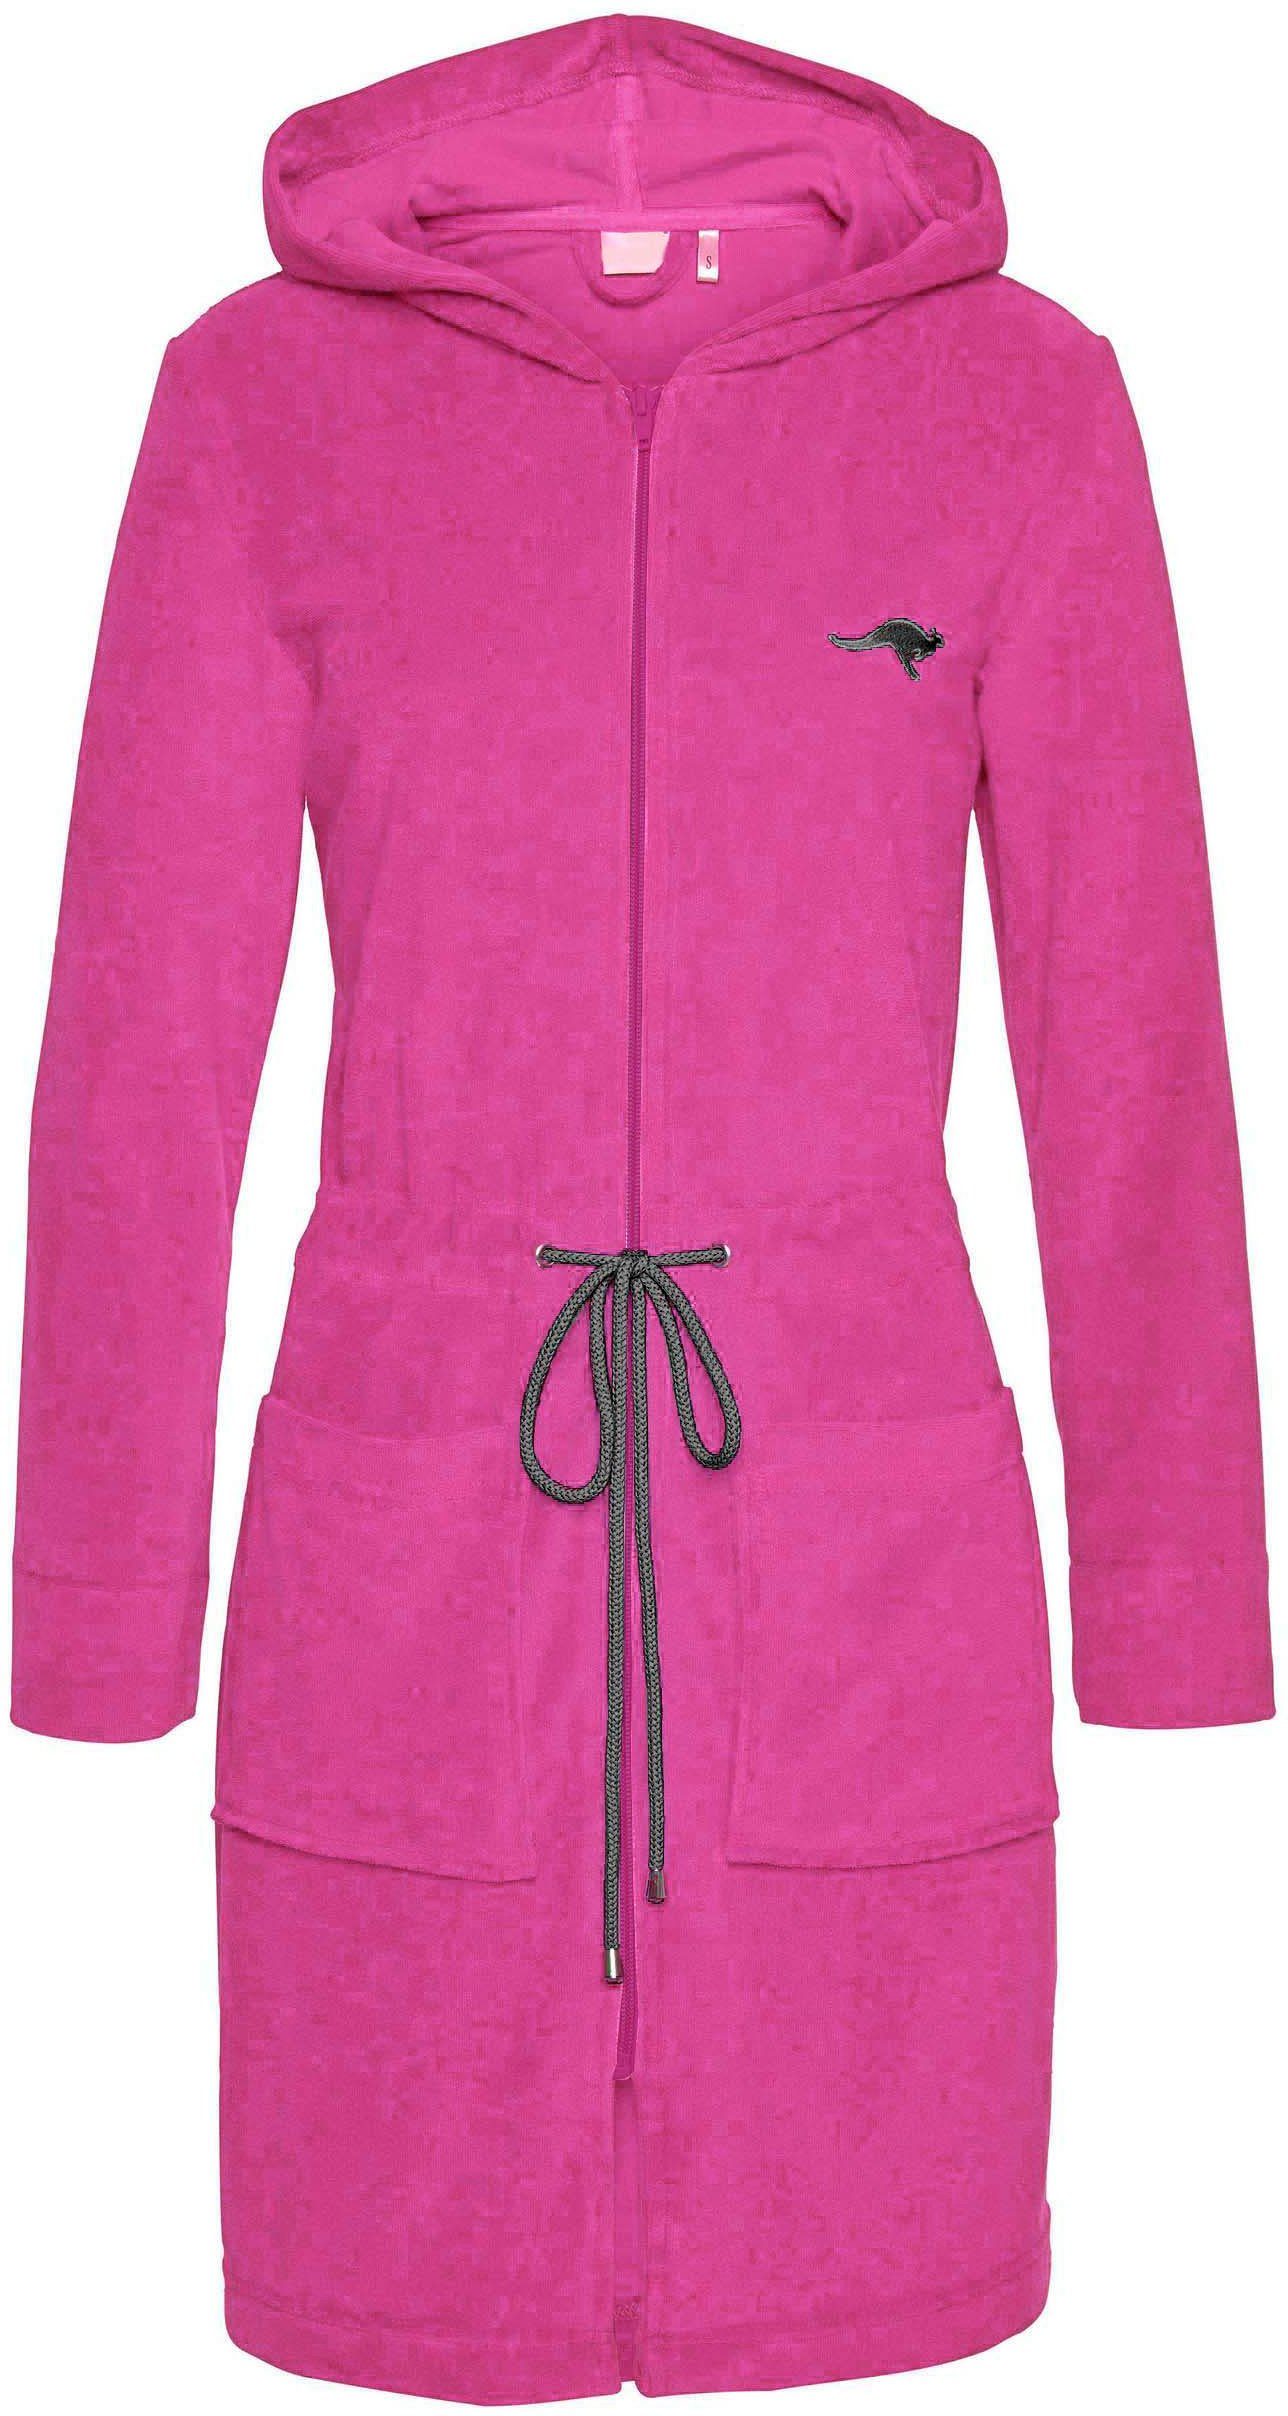 Kaufen Sie es jetzt, Originalprodukt KangaROOS Damenbademantel pink/grau Leichtfrottier, mit Reißverschluss, Kapuze, für kurz, Kira, XS-3XL Bindekordel, Kurzform, Damen, Bademäntel